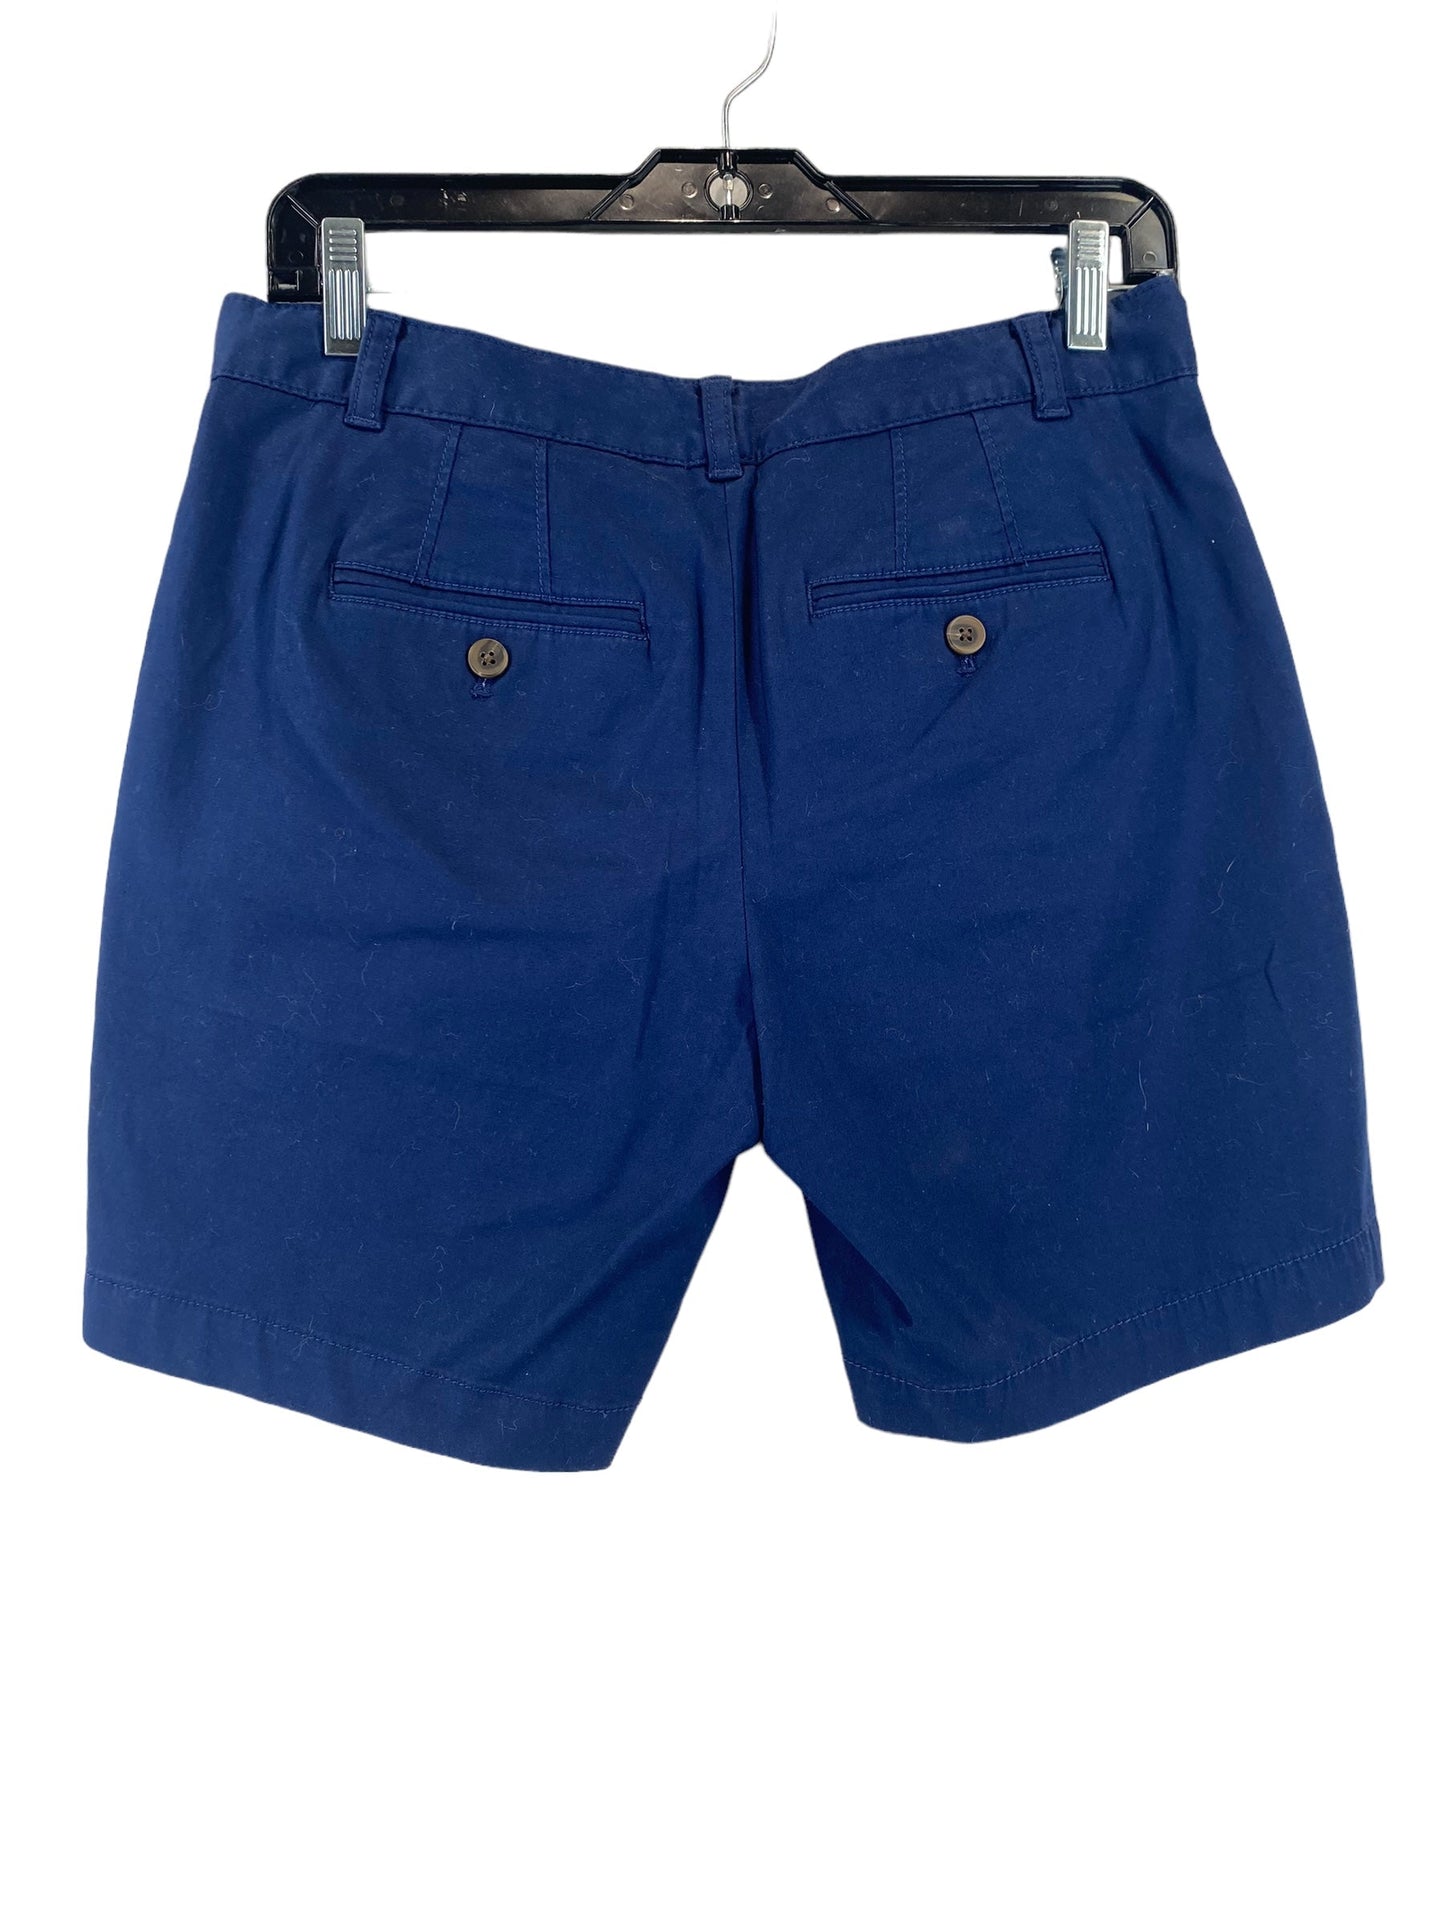 Shorts By Talbots  Size: 2